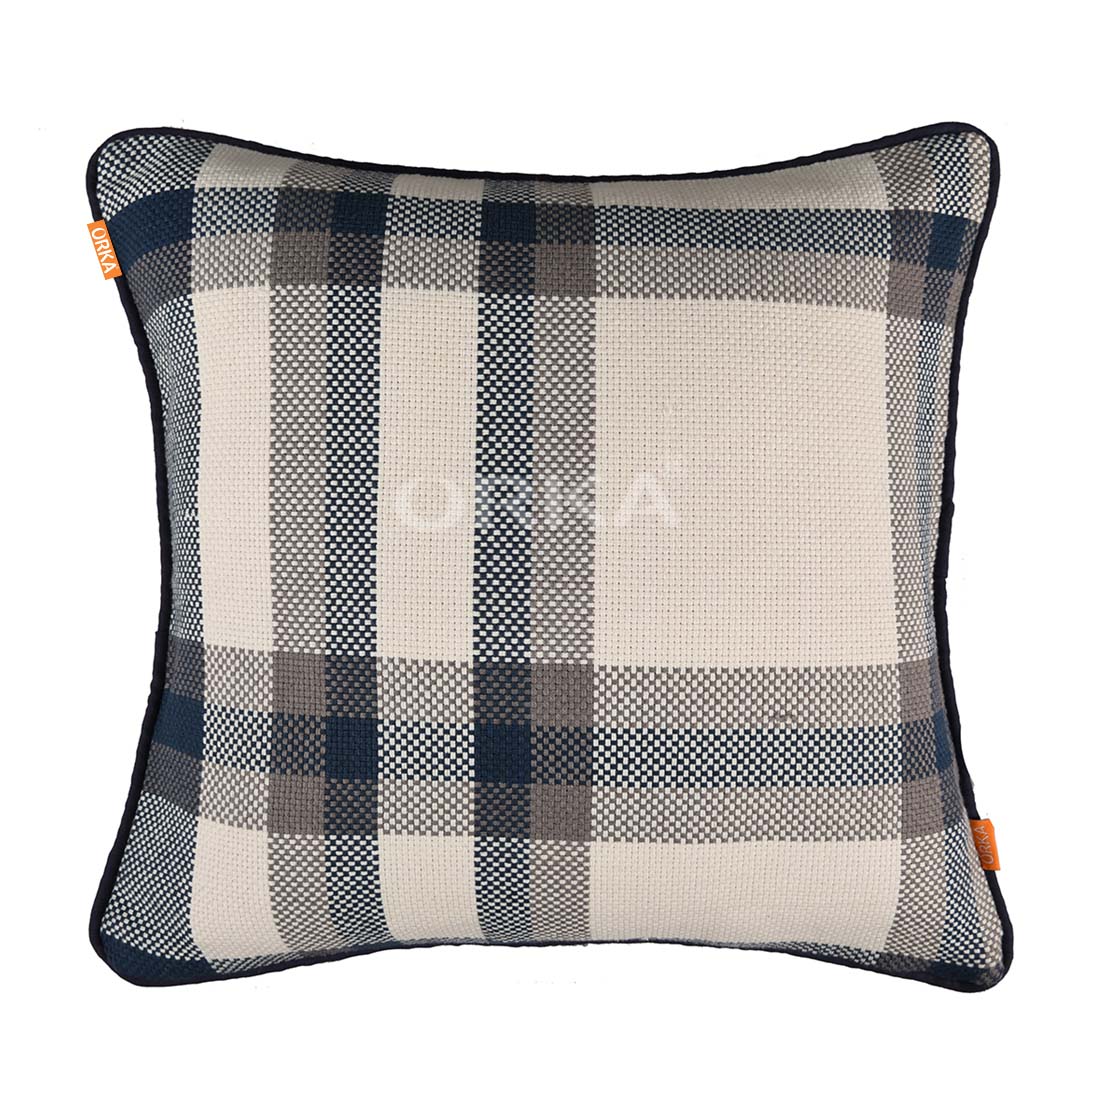 ORKA Cushion Cover Insert   